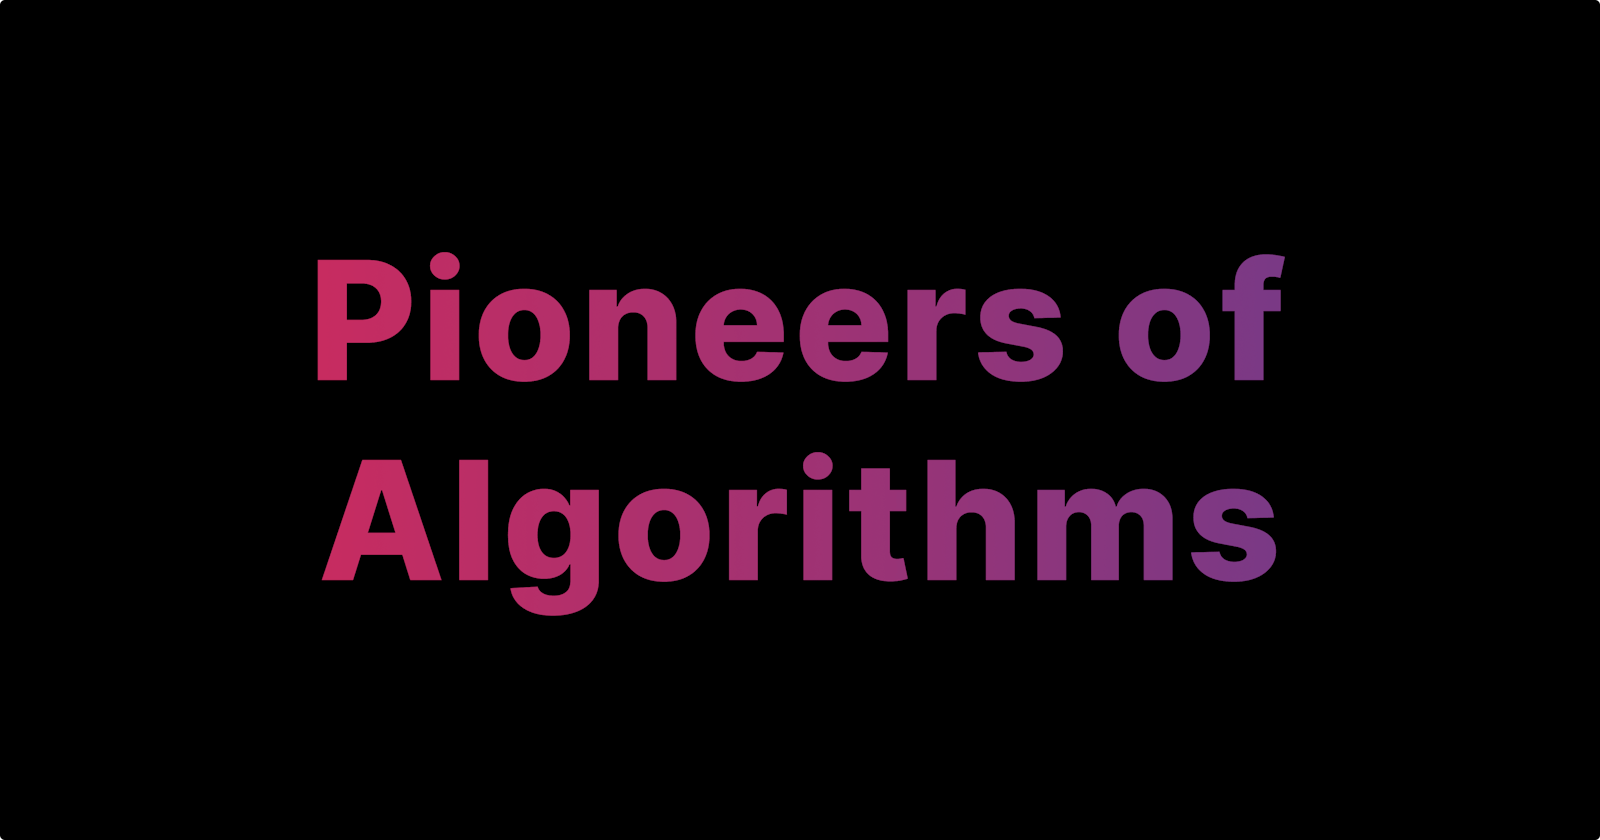 History: The Pioneers of Algorithms